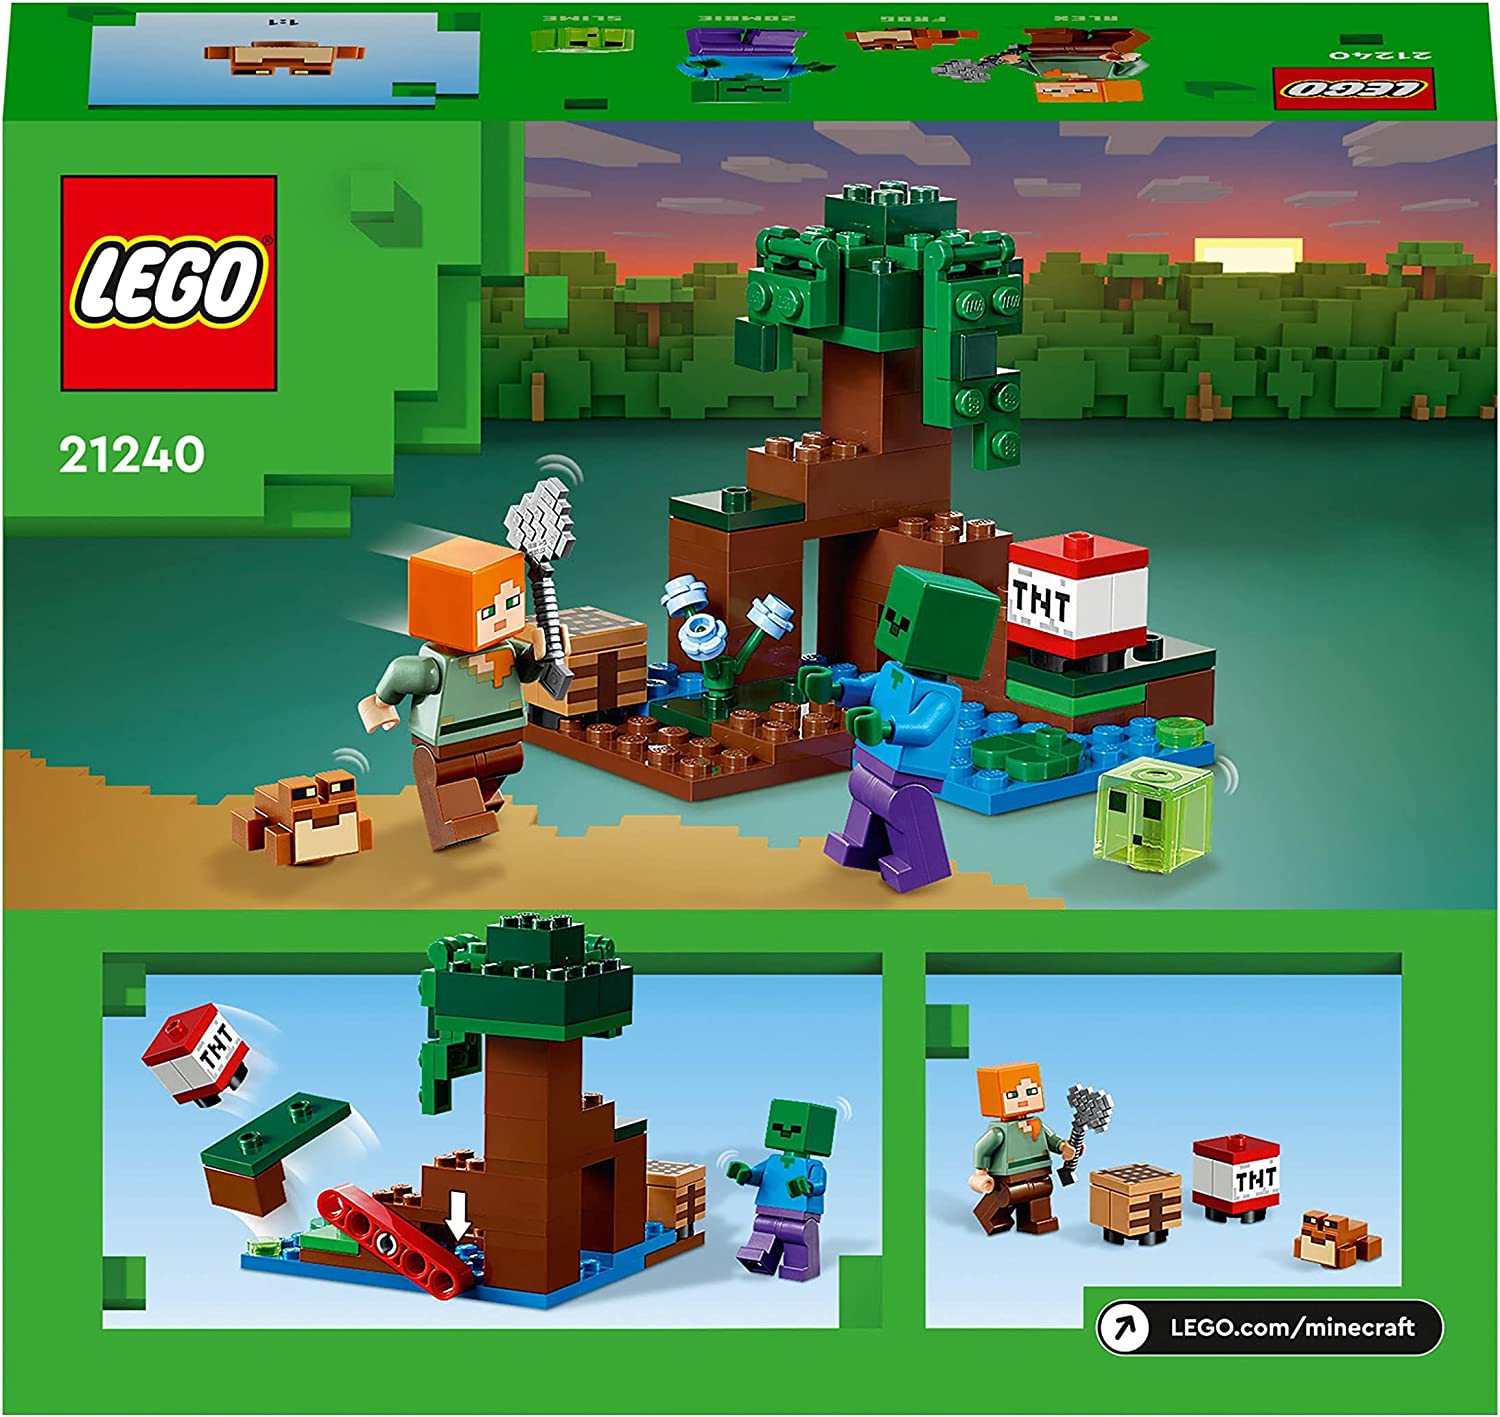 Lego minecraft the swamp adventure 21240 - LEGO, LEGO Minecraft